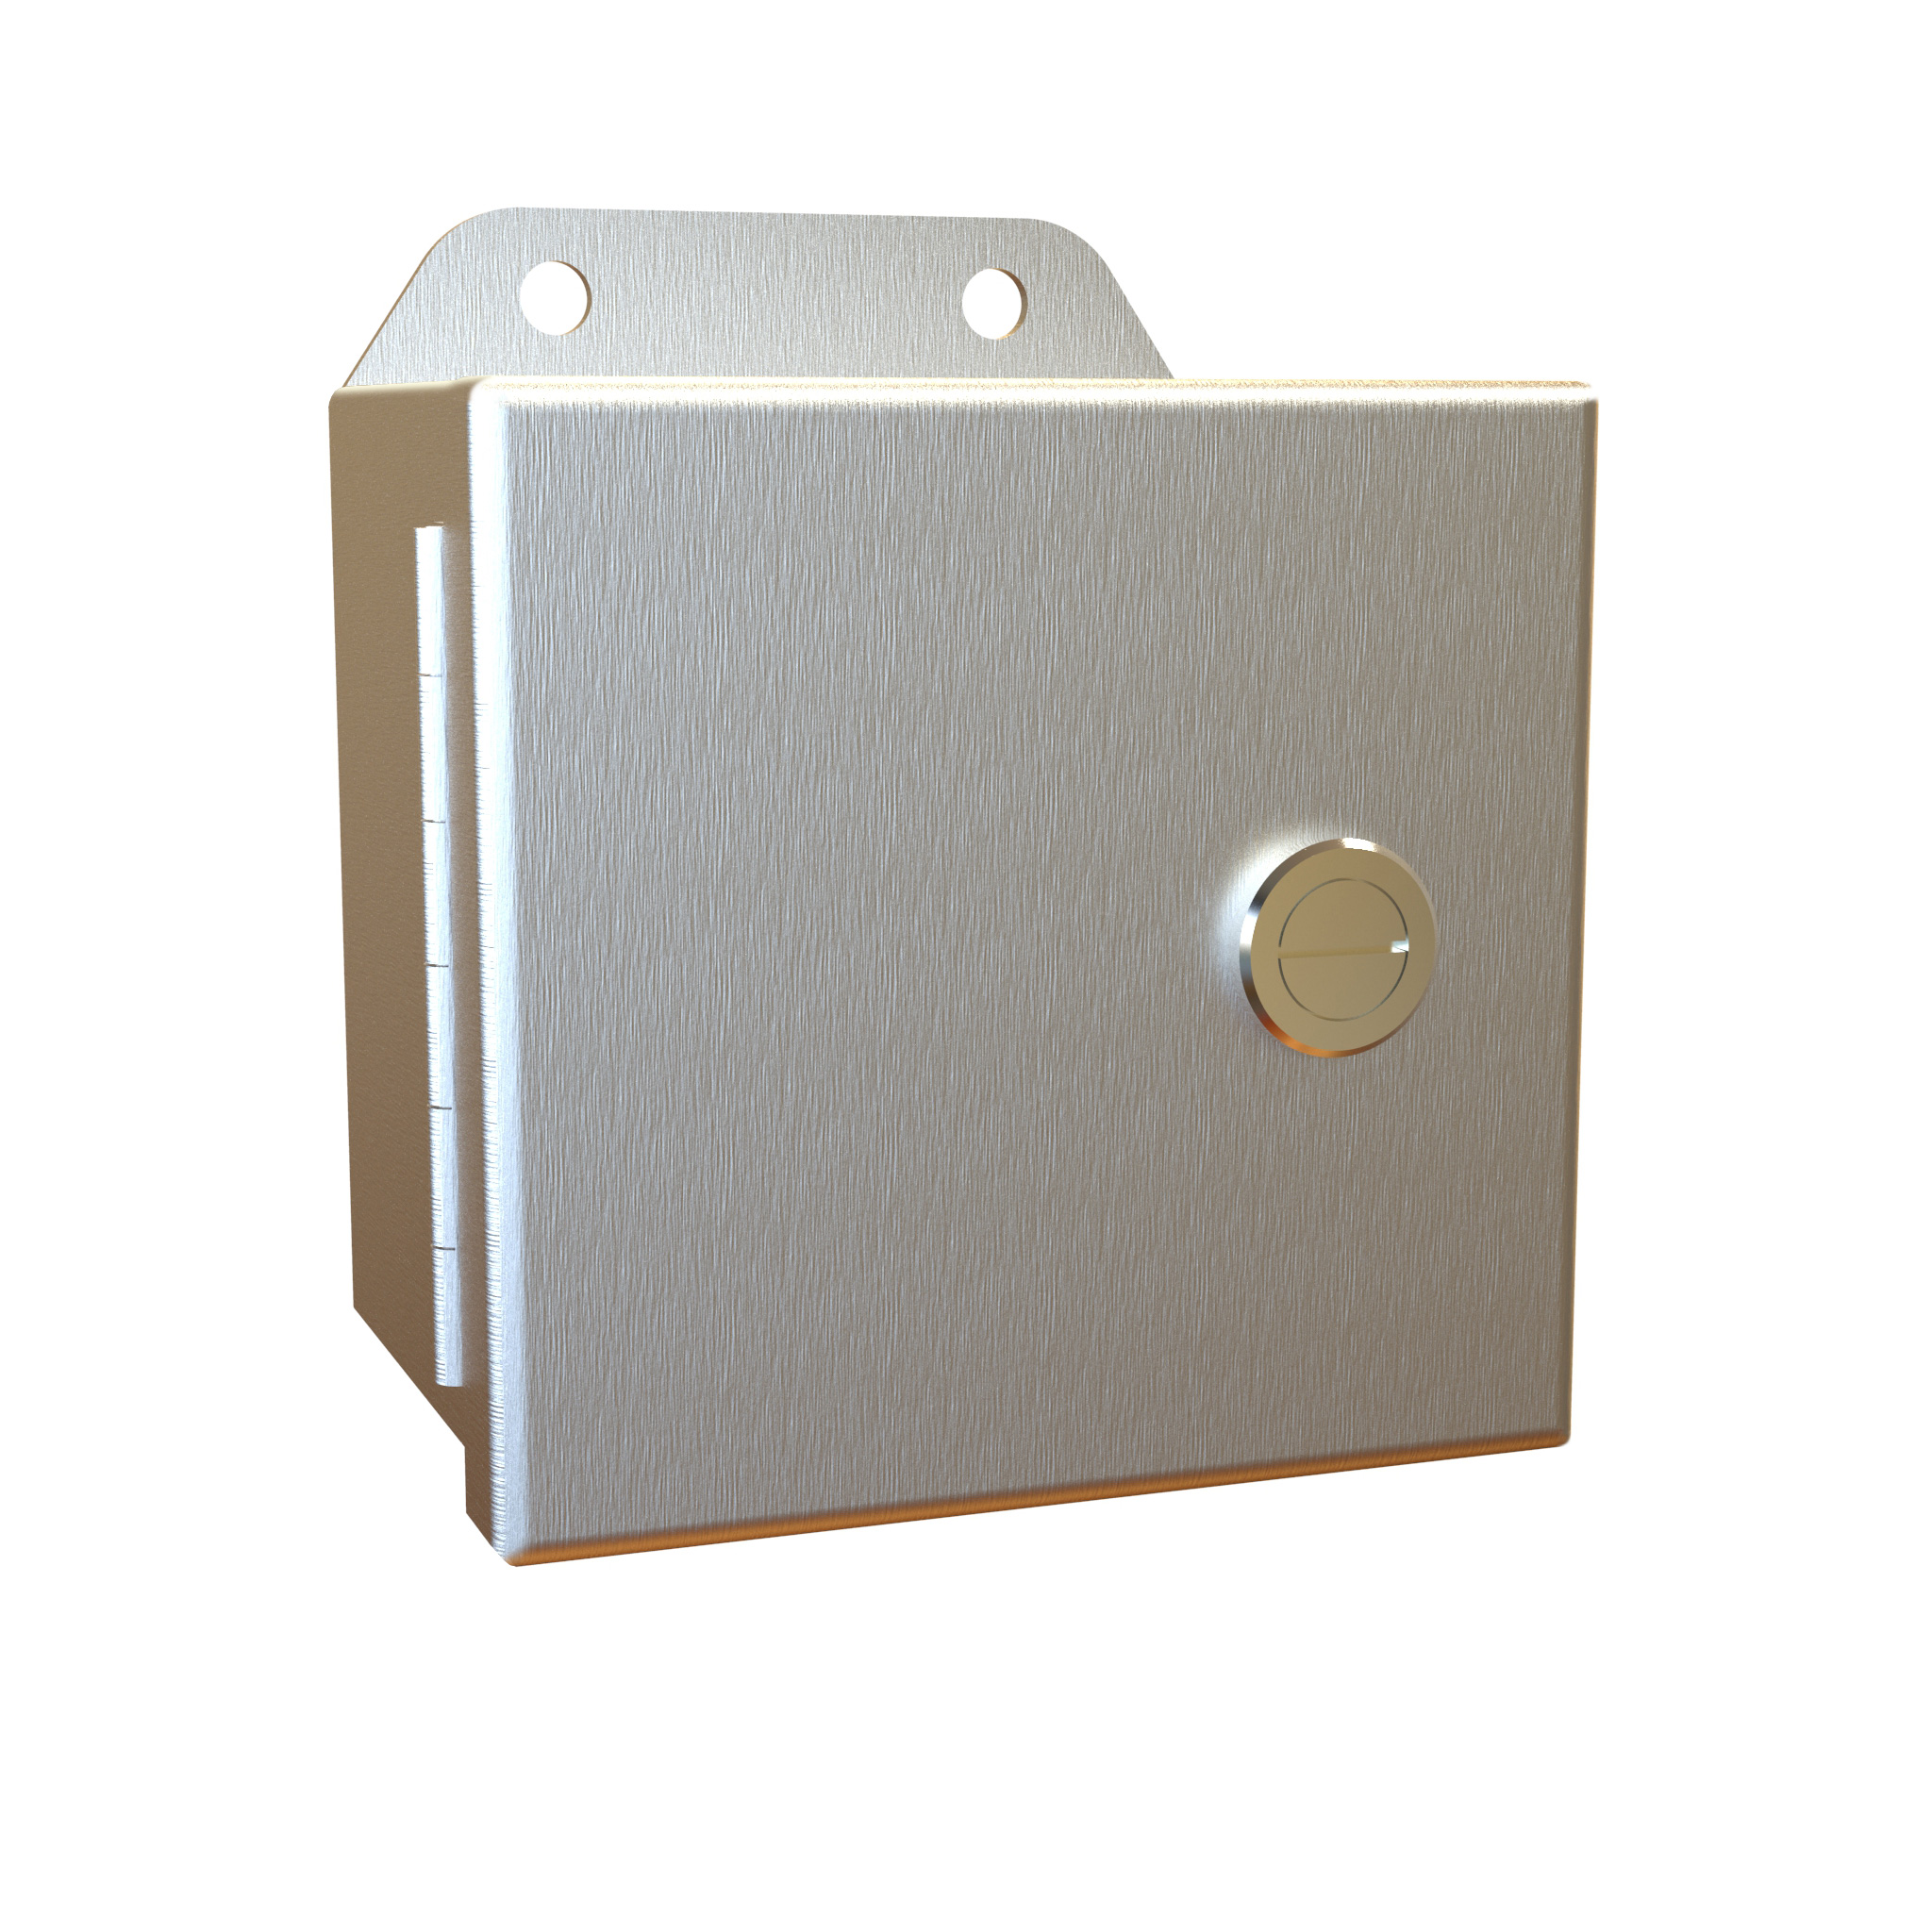 Hammond Manufacturing - Type 4X Aluminum Junction Box